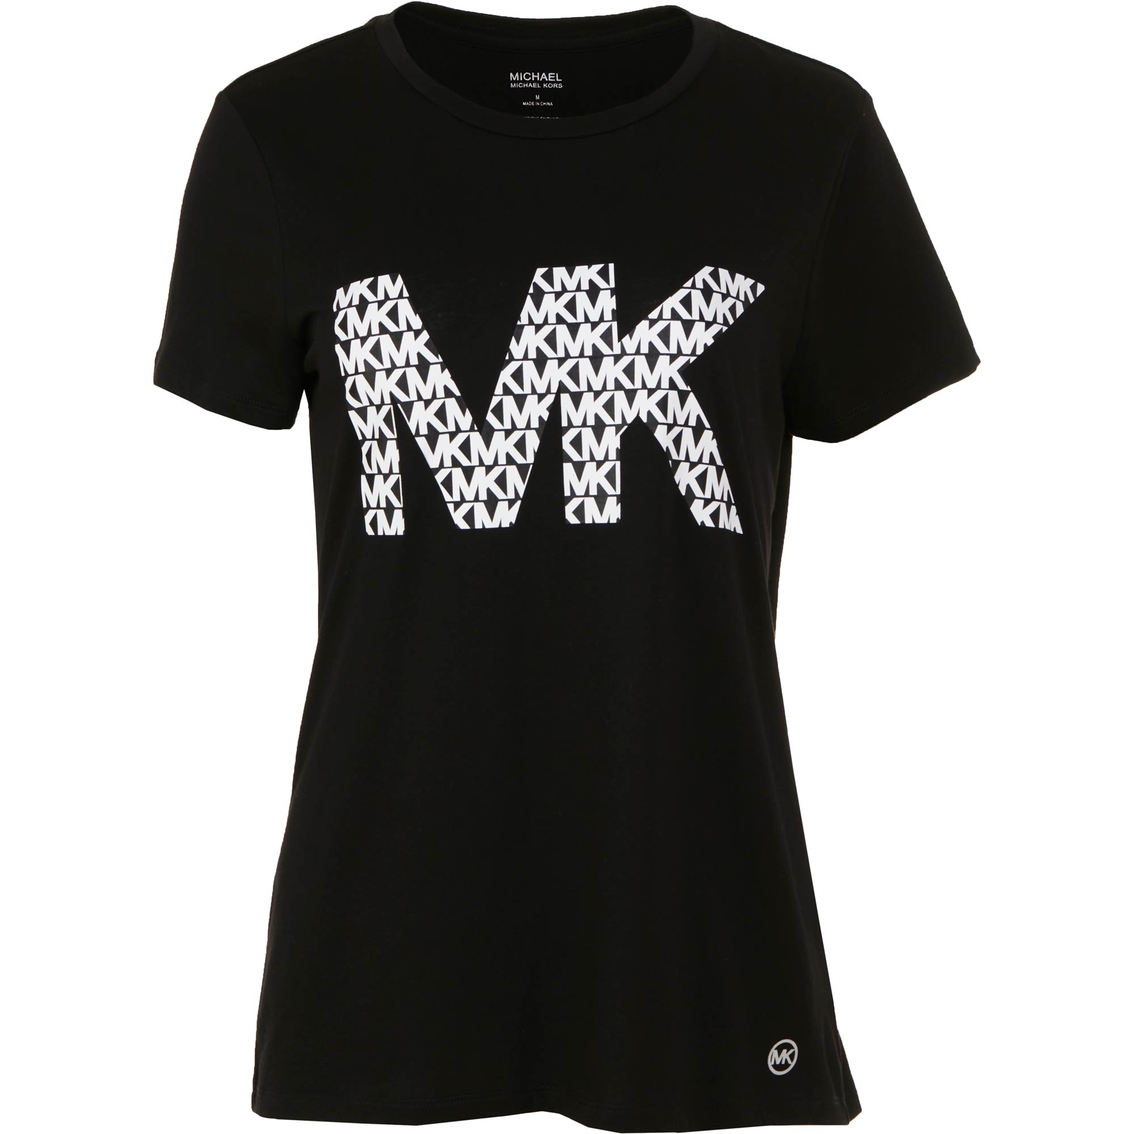 Michael Kors Printed Mk Logo Tee | Tops | Clothing & Accessories | Shop ...